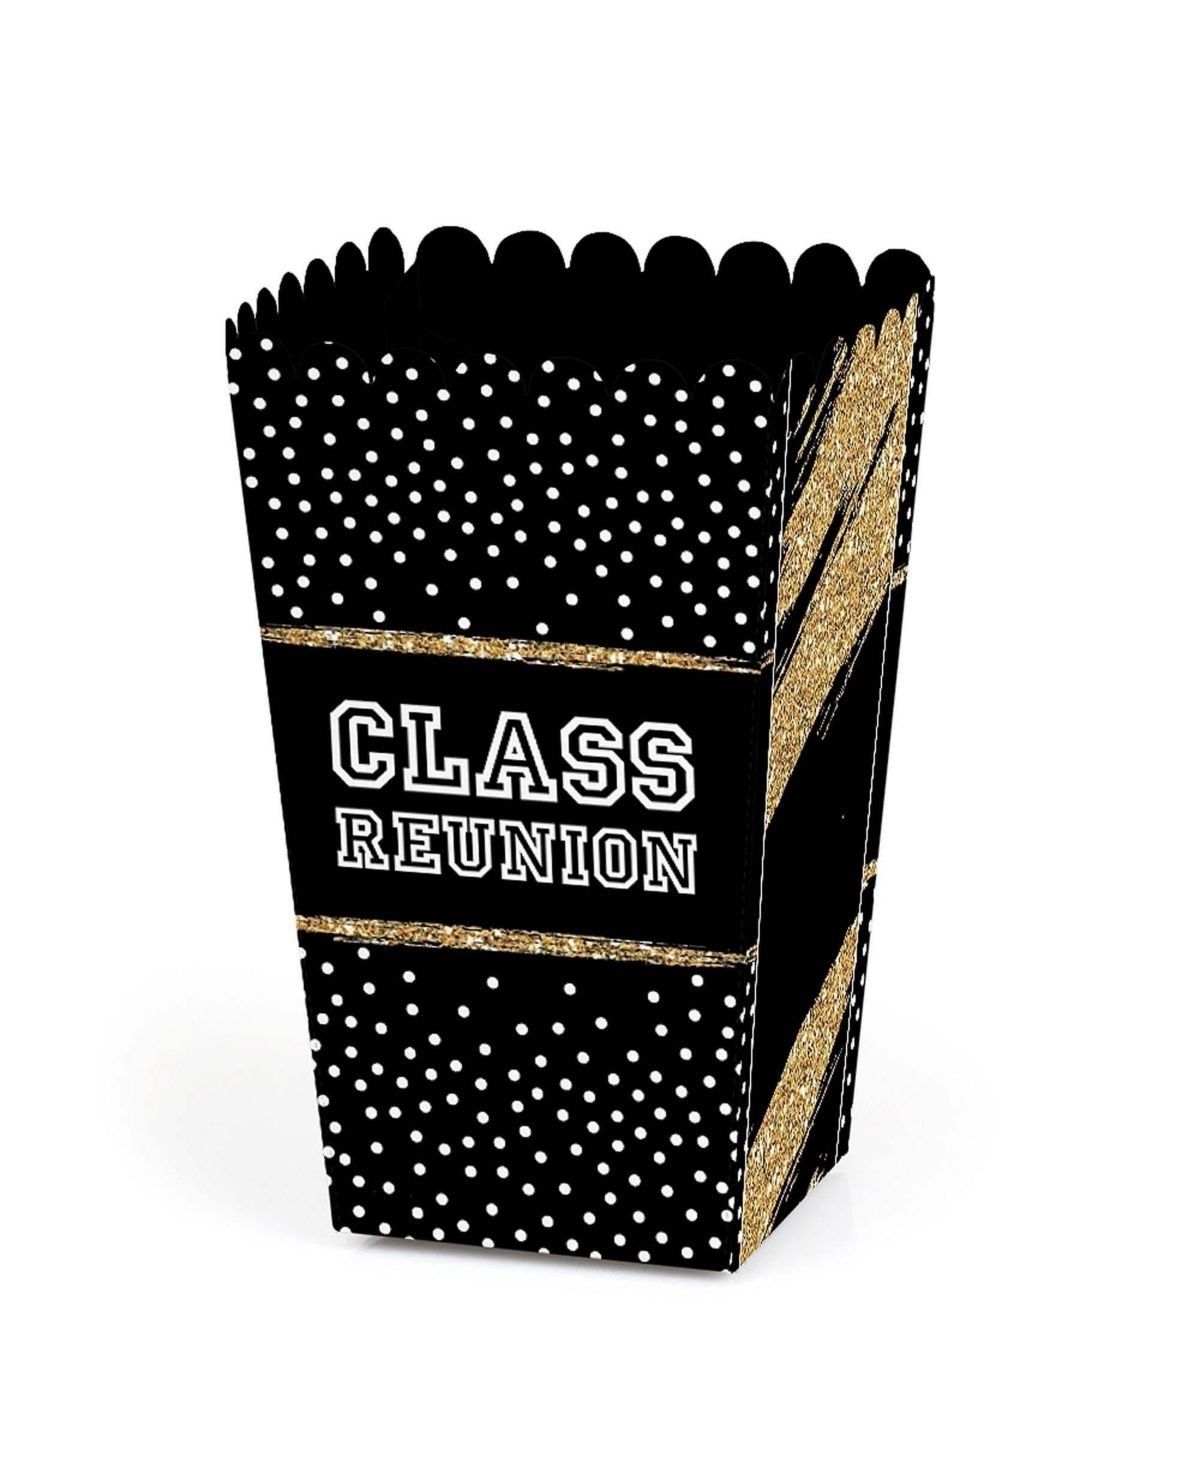 Big Dot of Happiness Reunited - School Class Reunion Party Favor Popcorn Treat Boxes - Set of 12 | Macys (US)